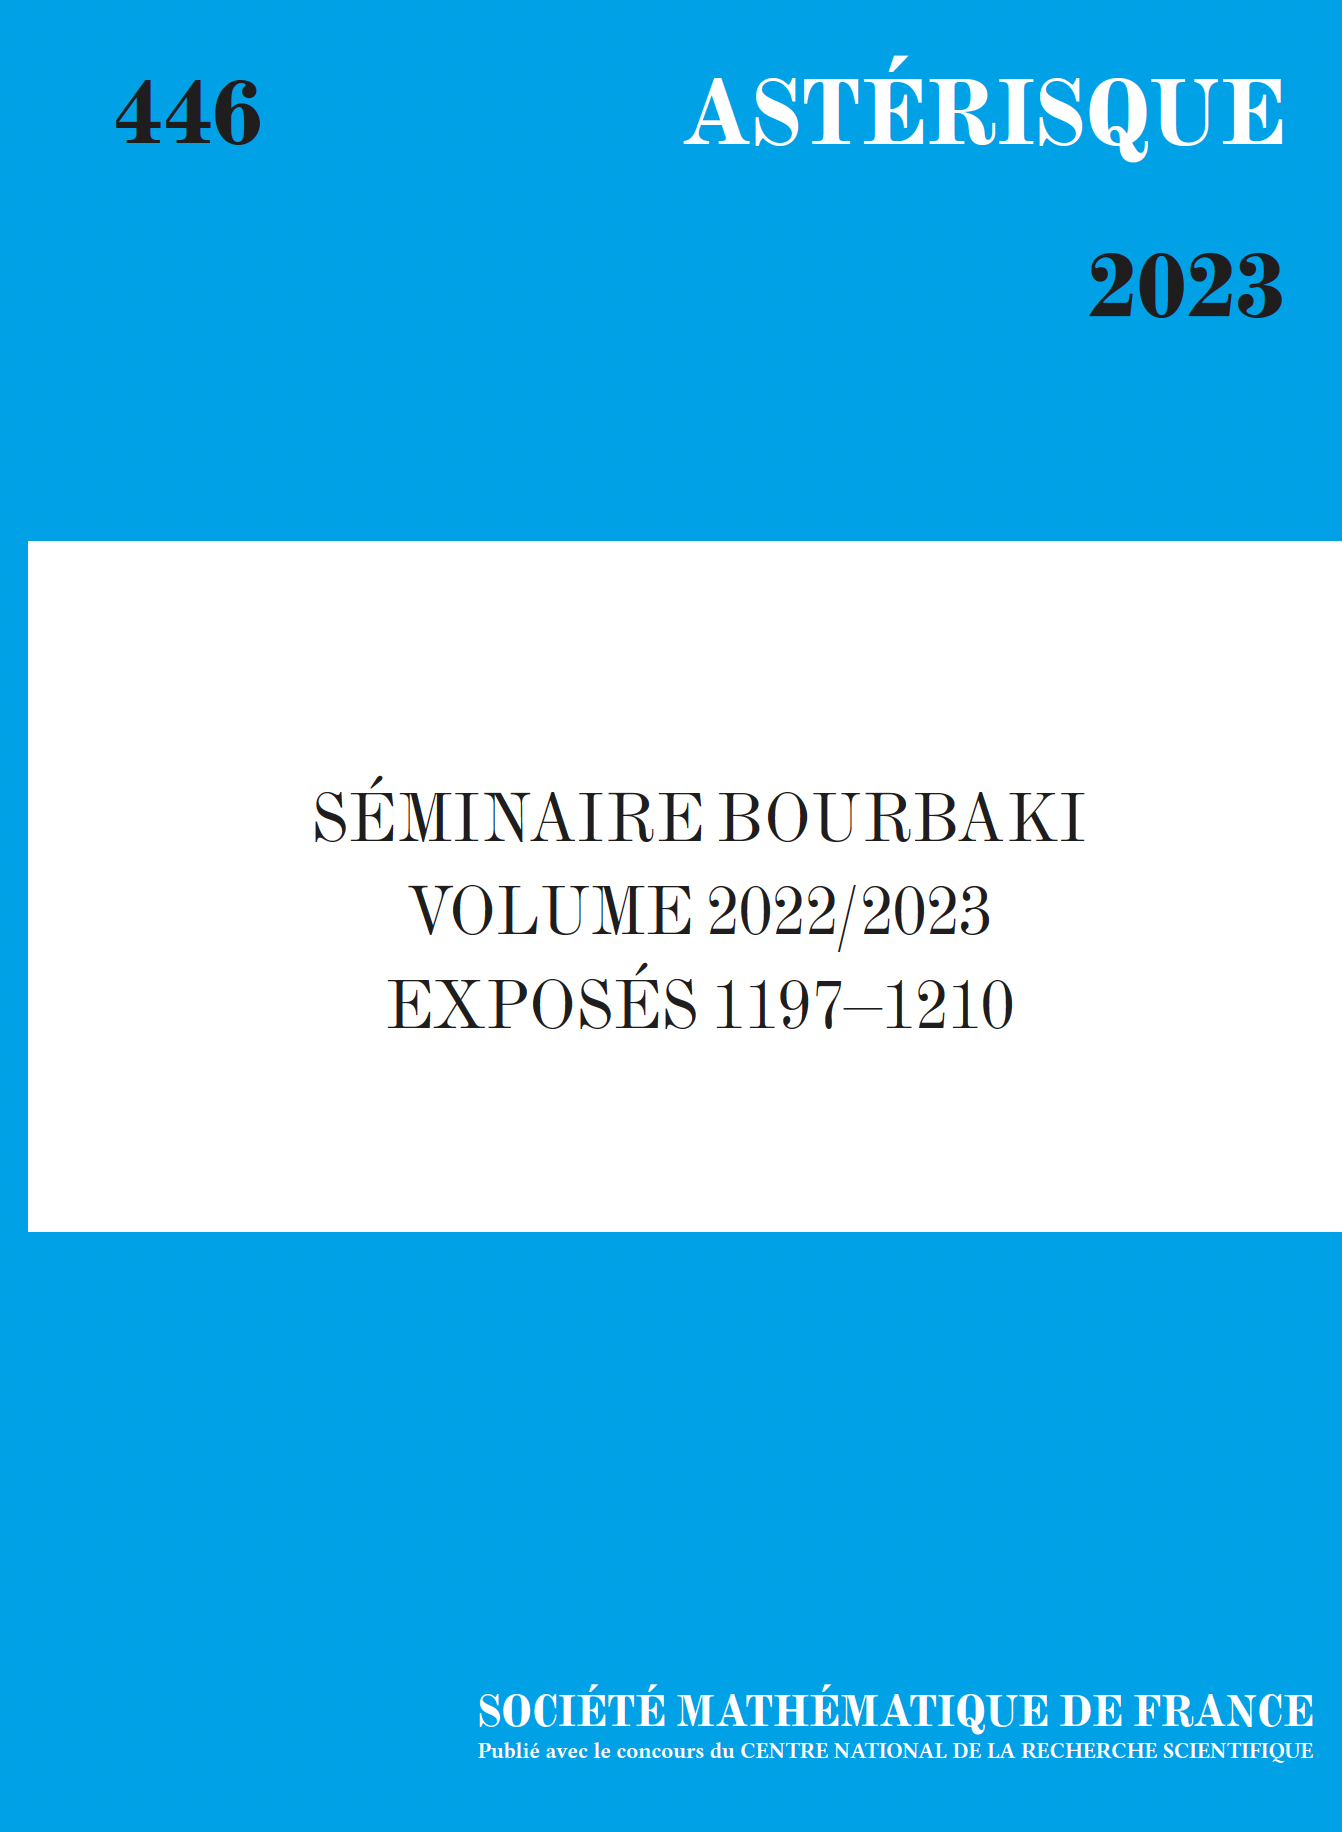 Séminaire Bourbaki, volume 2022/2023, exposés 1197-1210